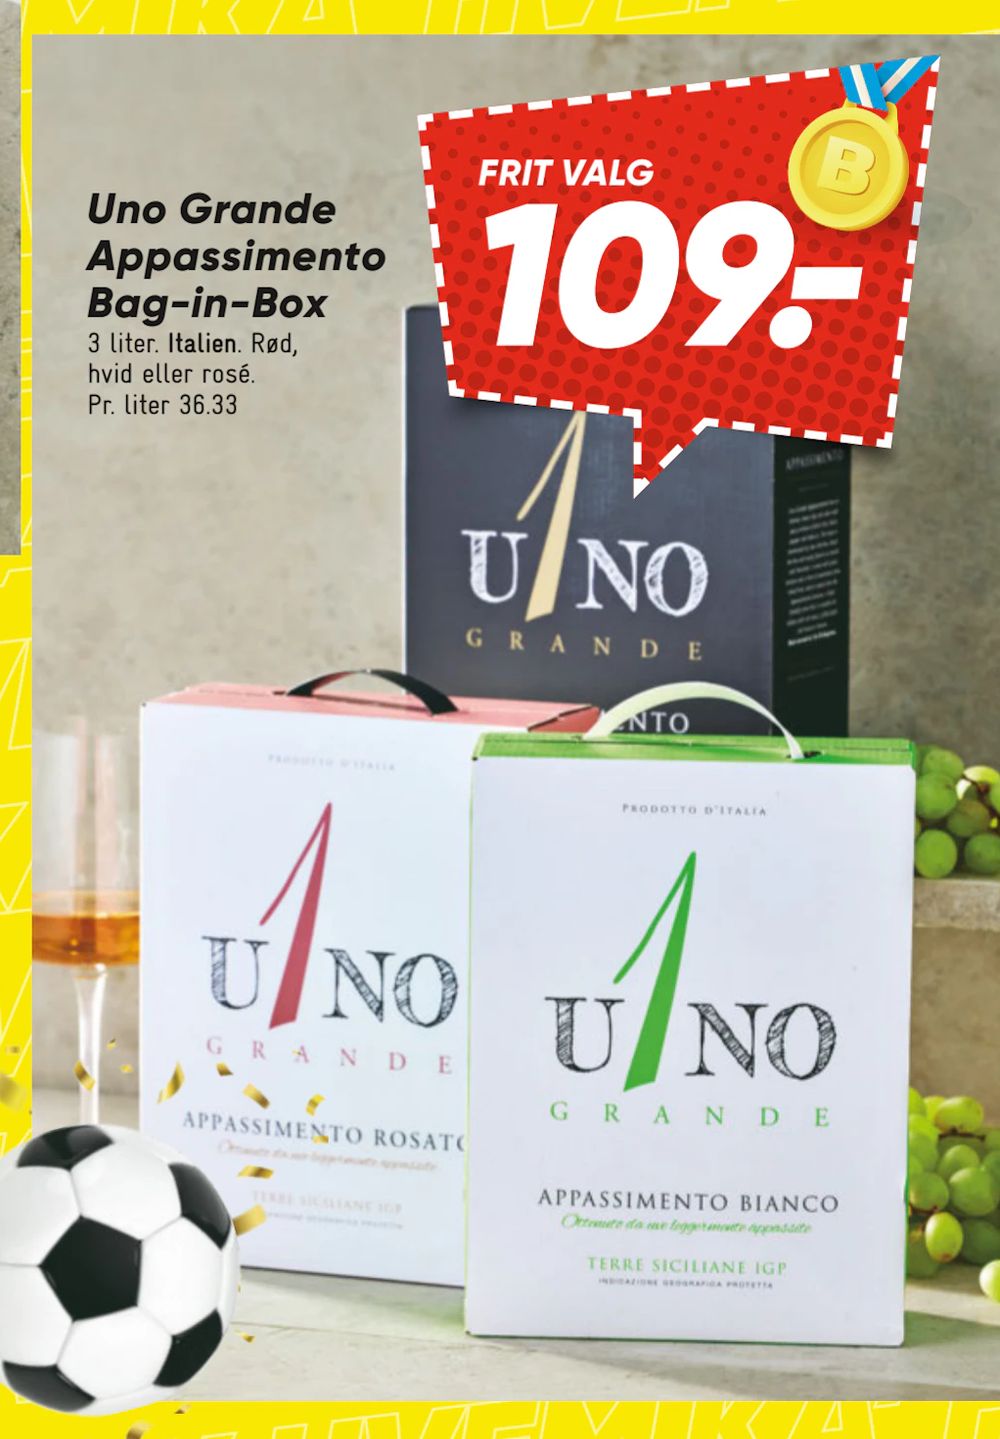 Tilbud på Uno Grande Appassimento Bag-in-Box fra Bilka til 109 kr.